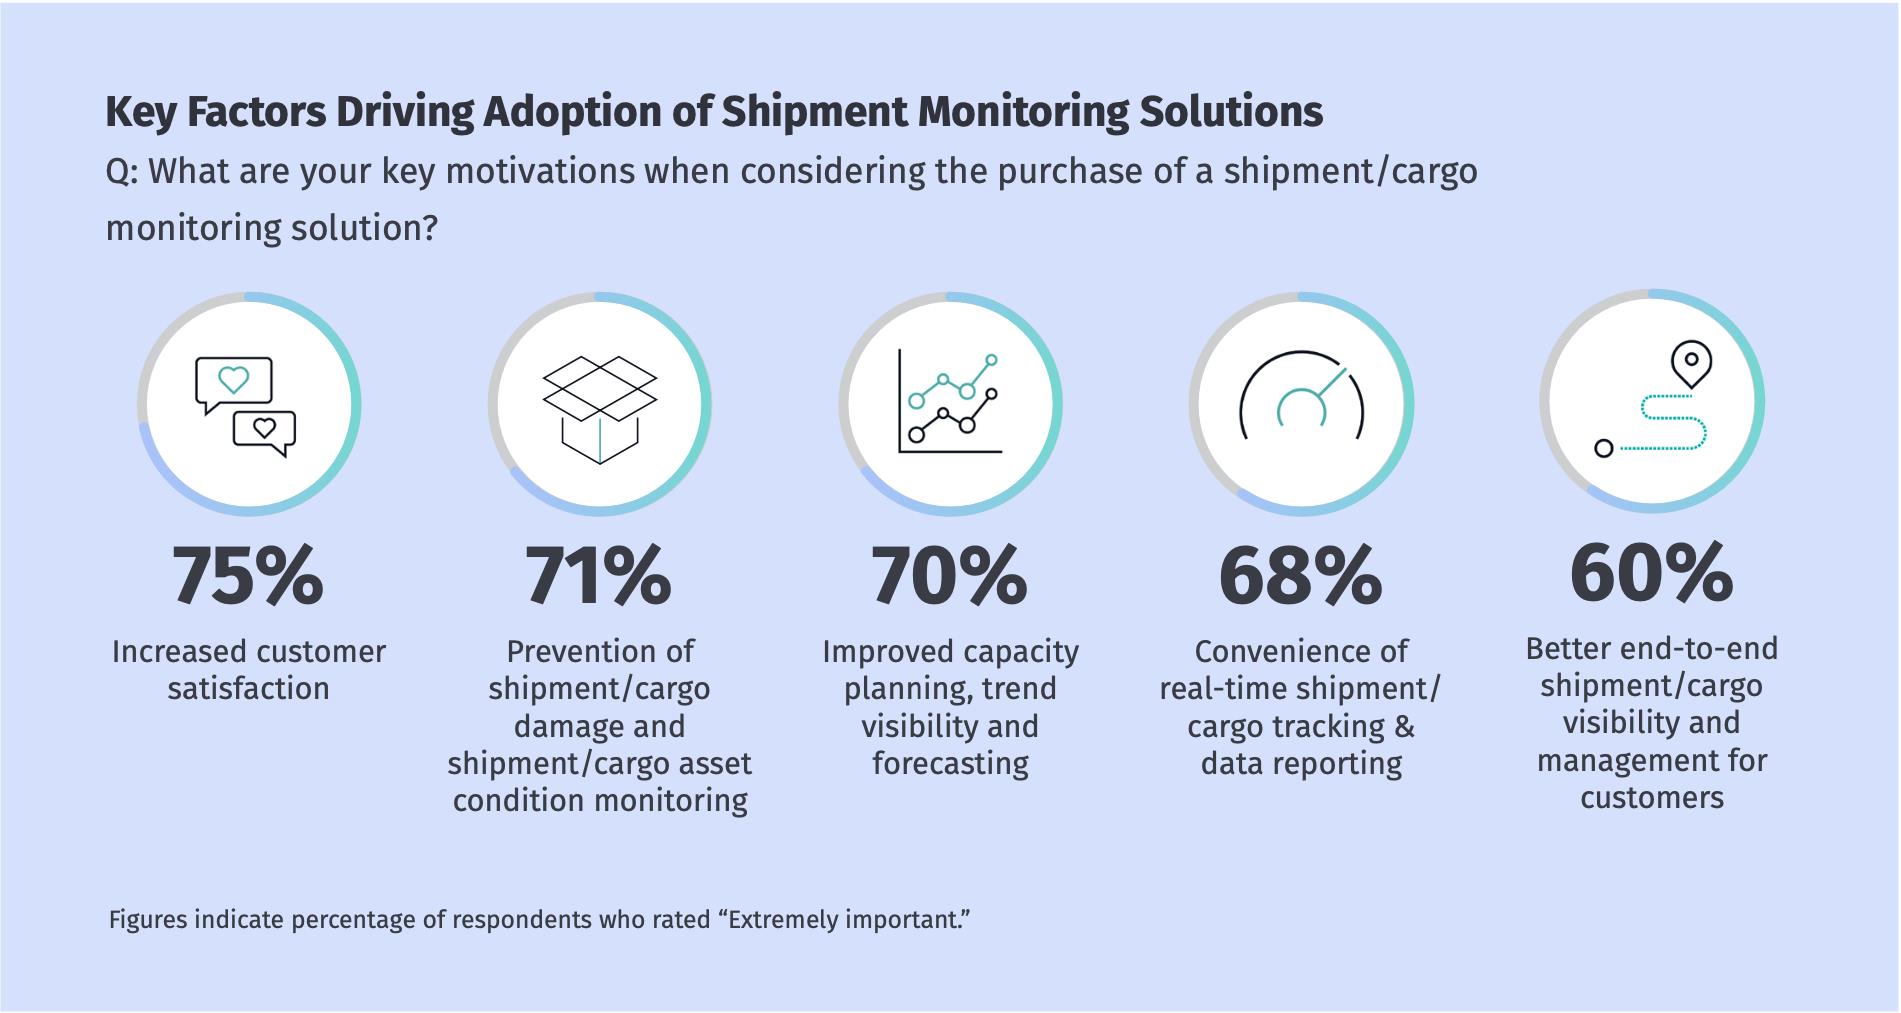 Key factors driving adoption of shipment monitoring solutions